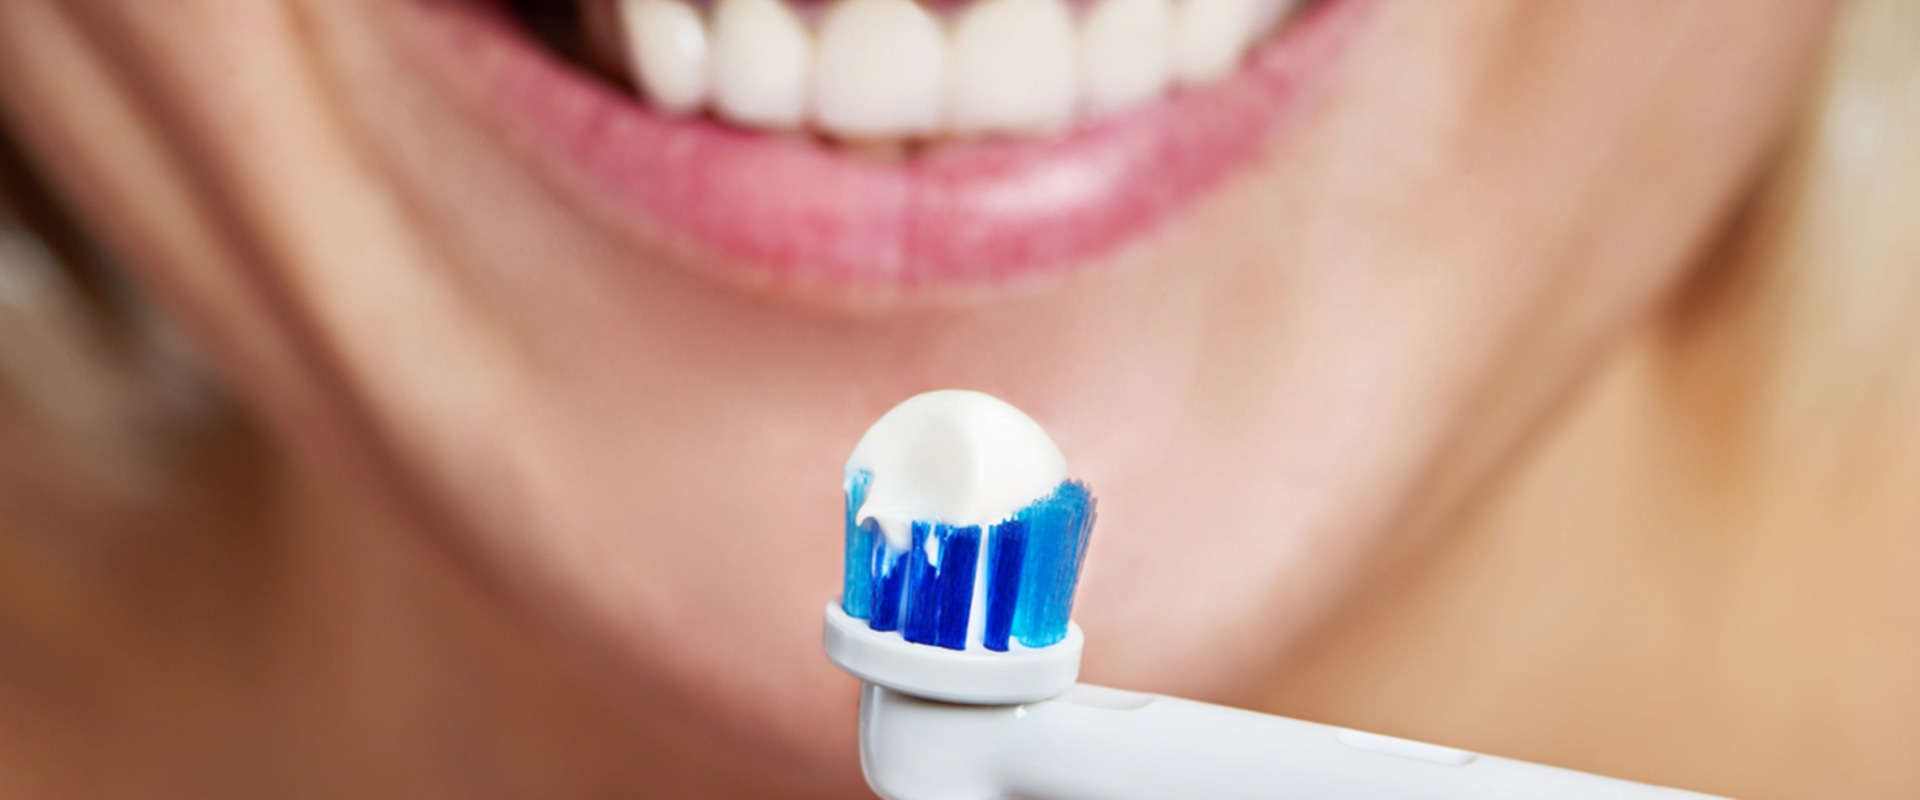 Proper Brushing Techniques for Affordable Dental Coverage